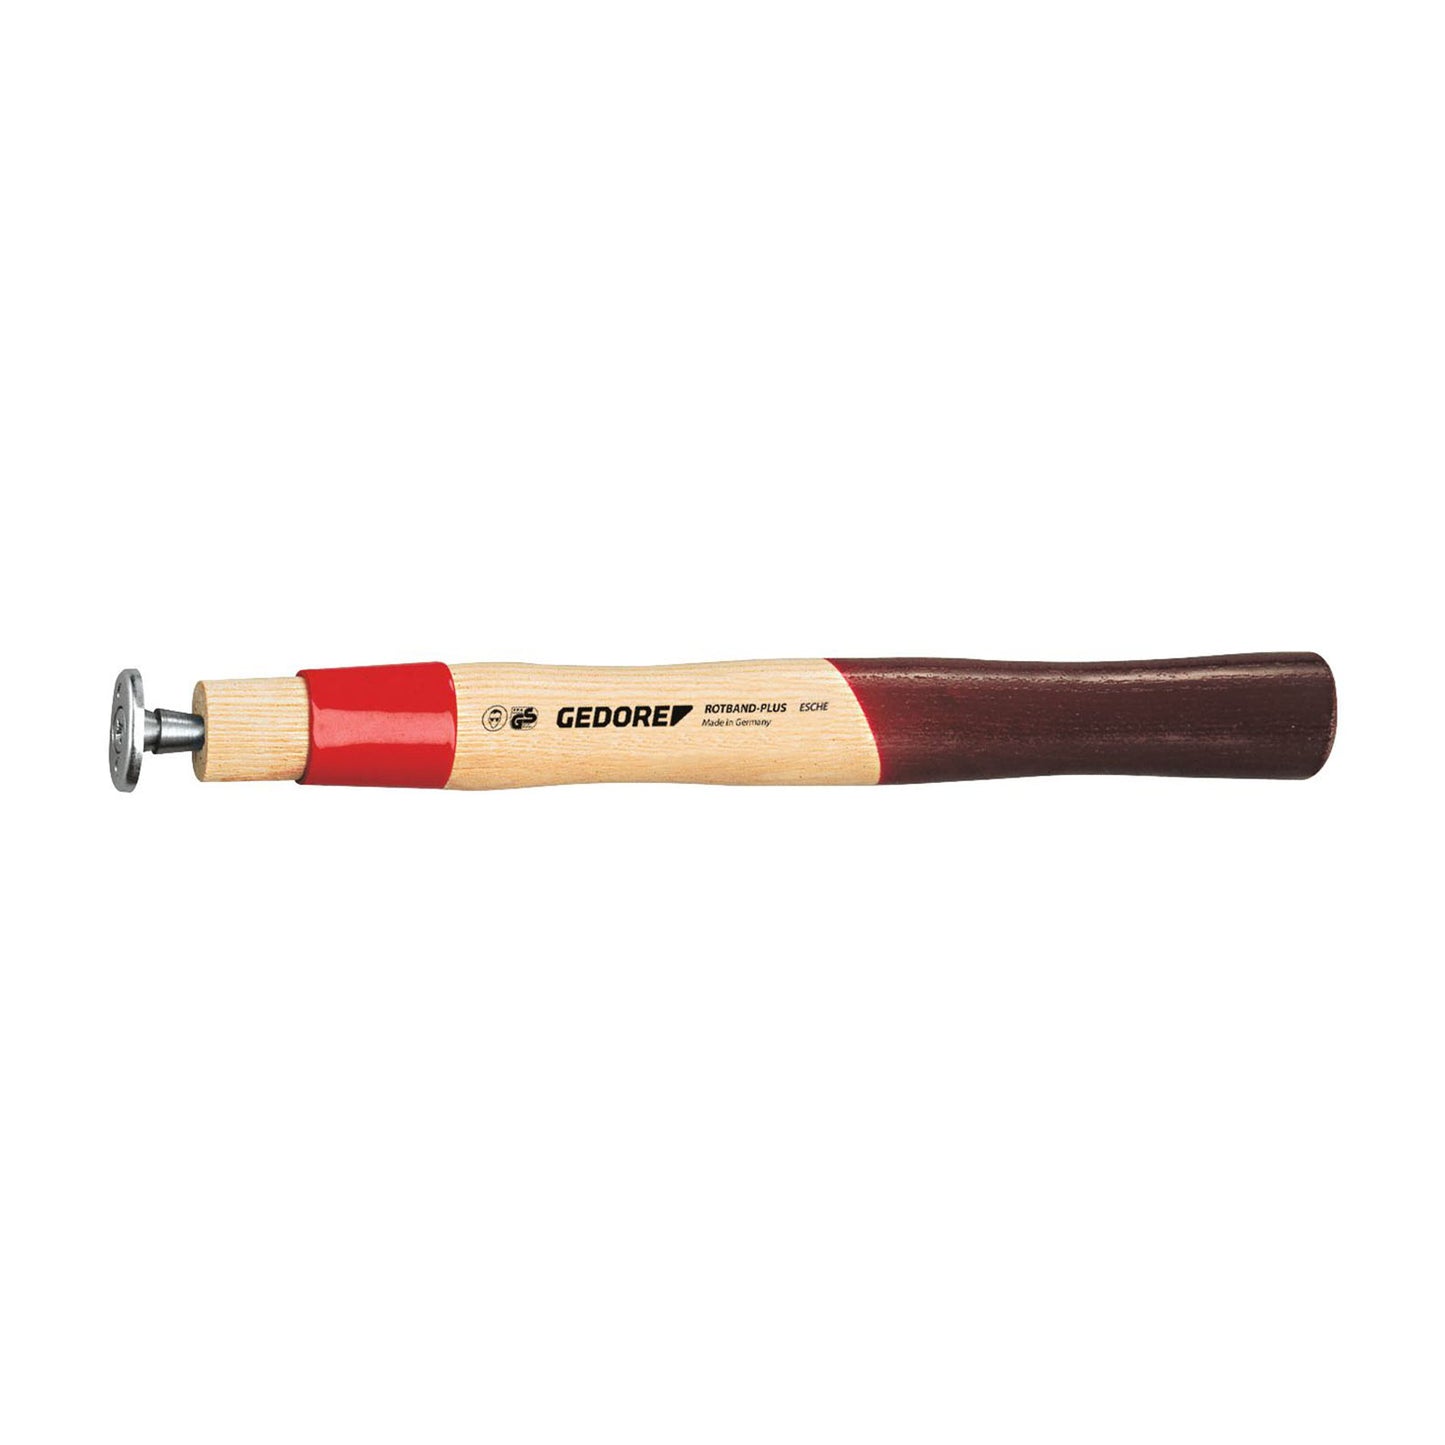 GEDORE E-620 E-1250 - ROTBAND ash handle 26cm (8749650)